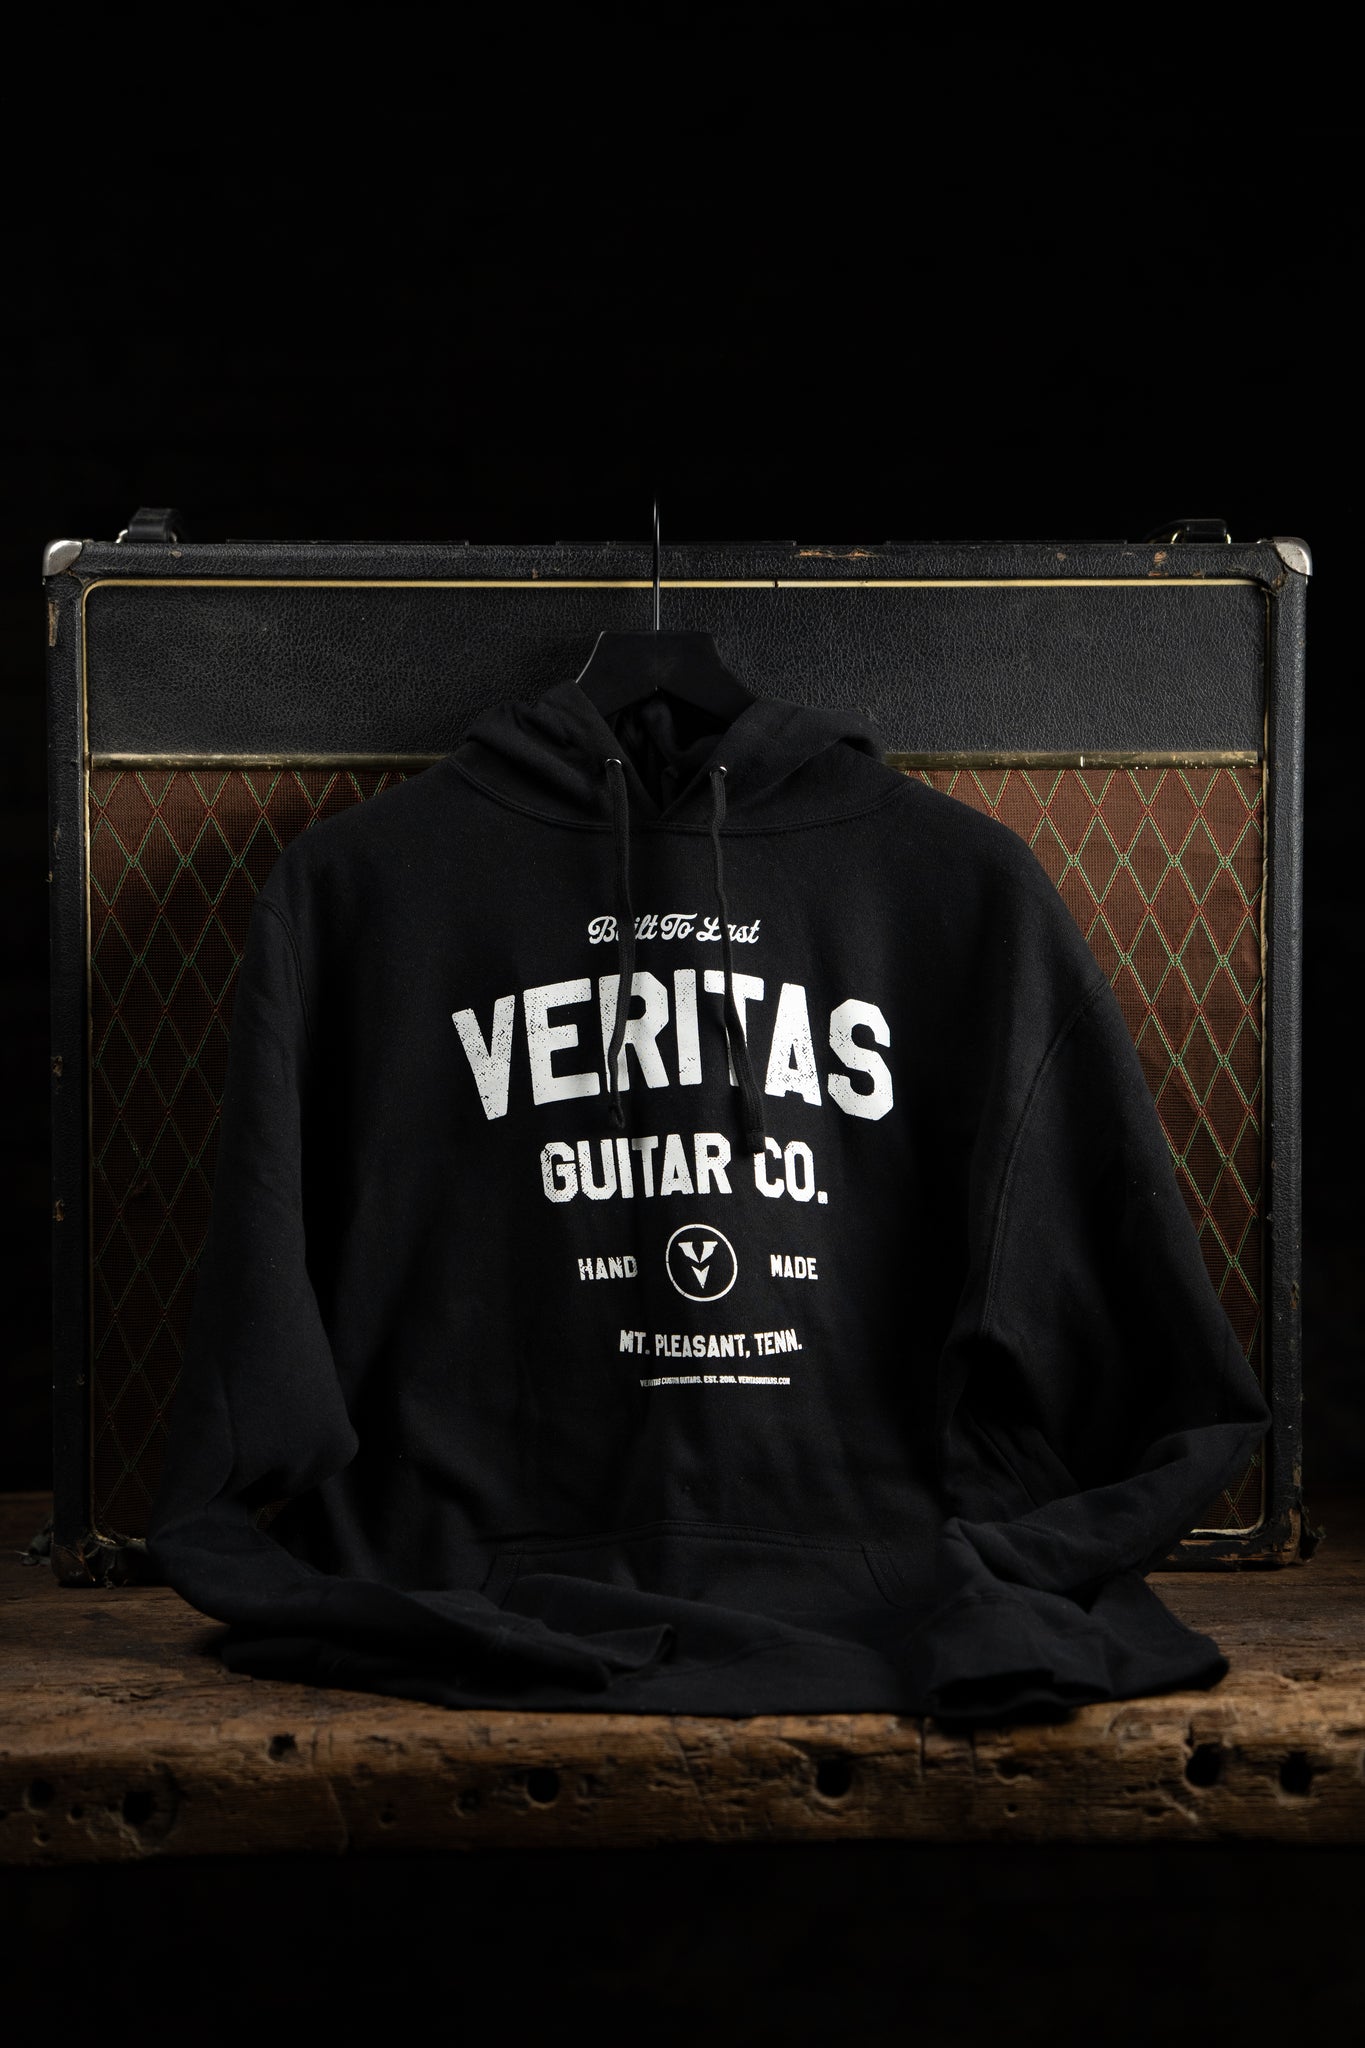 Veritas Guitars Built To Last - Heavy Pull Over Hoodie - Black / White Print